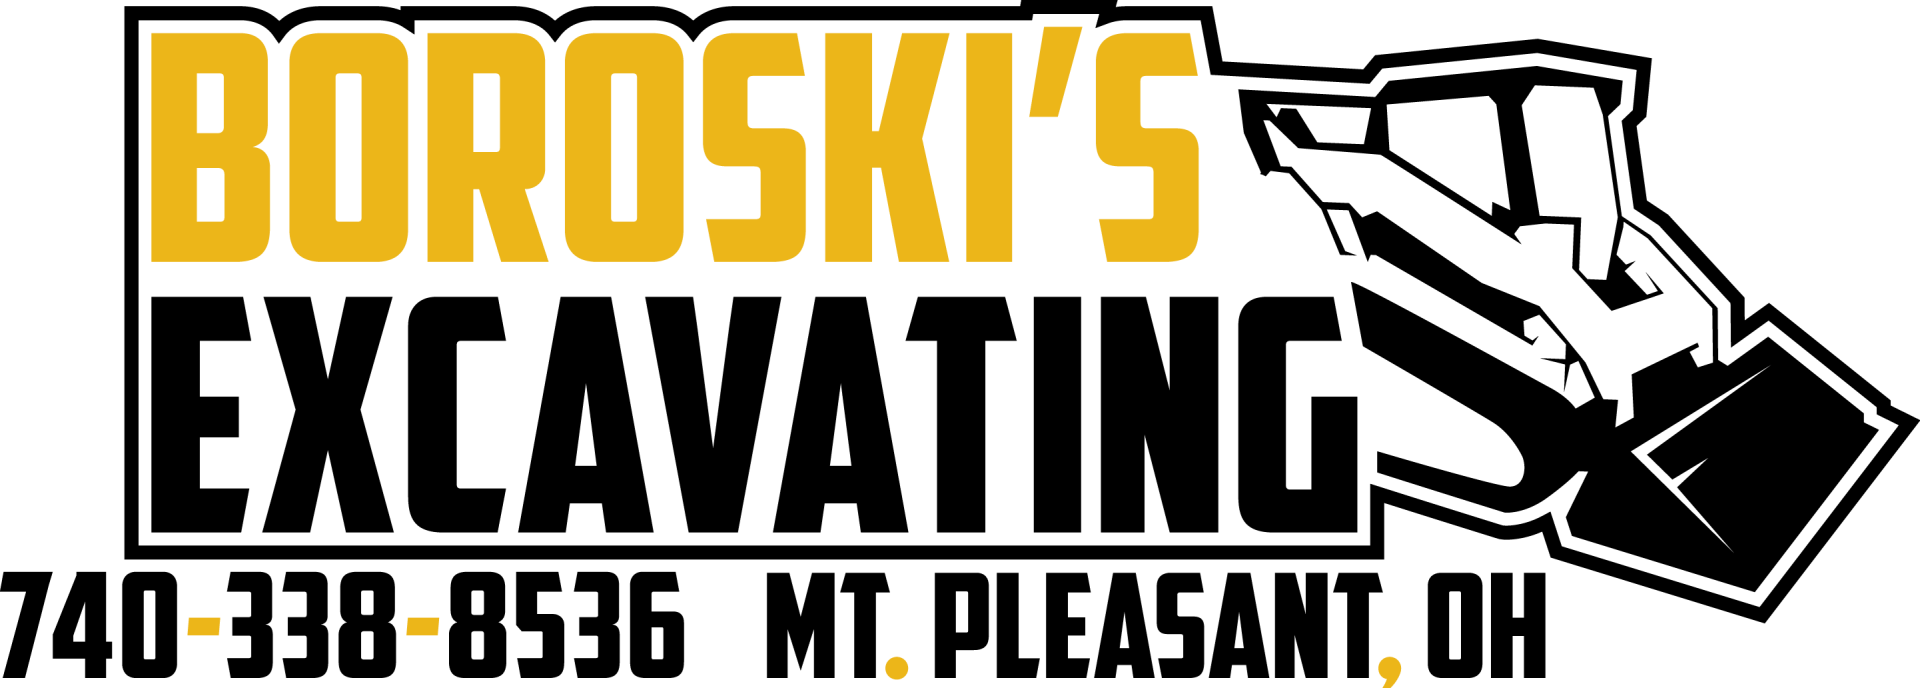 Boroski Excavating - Logo